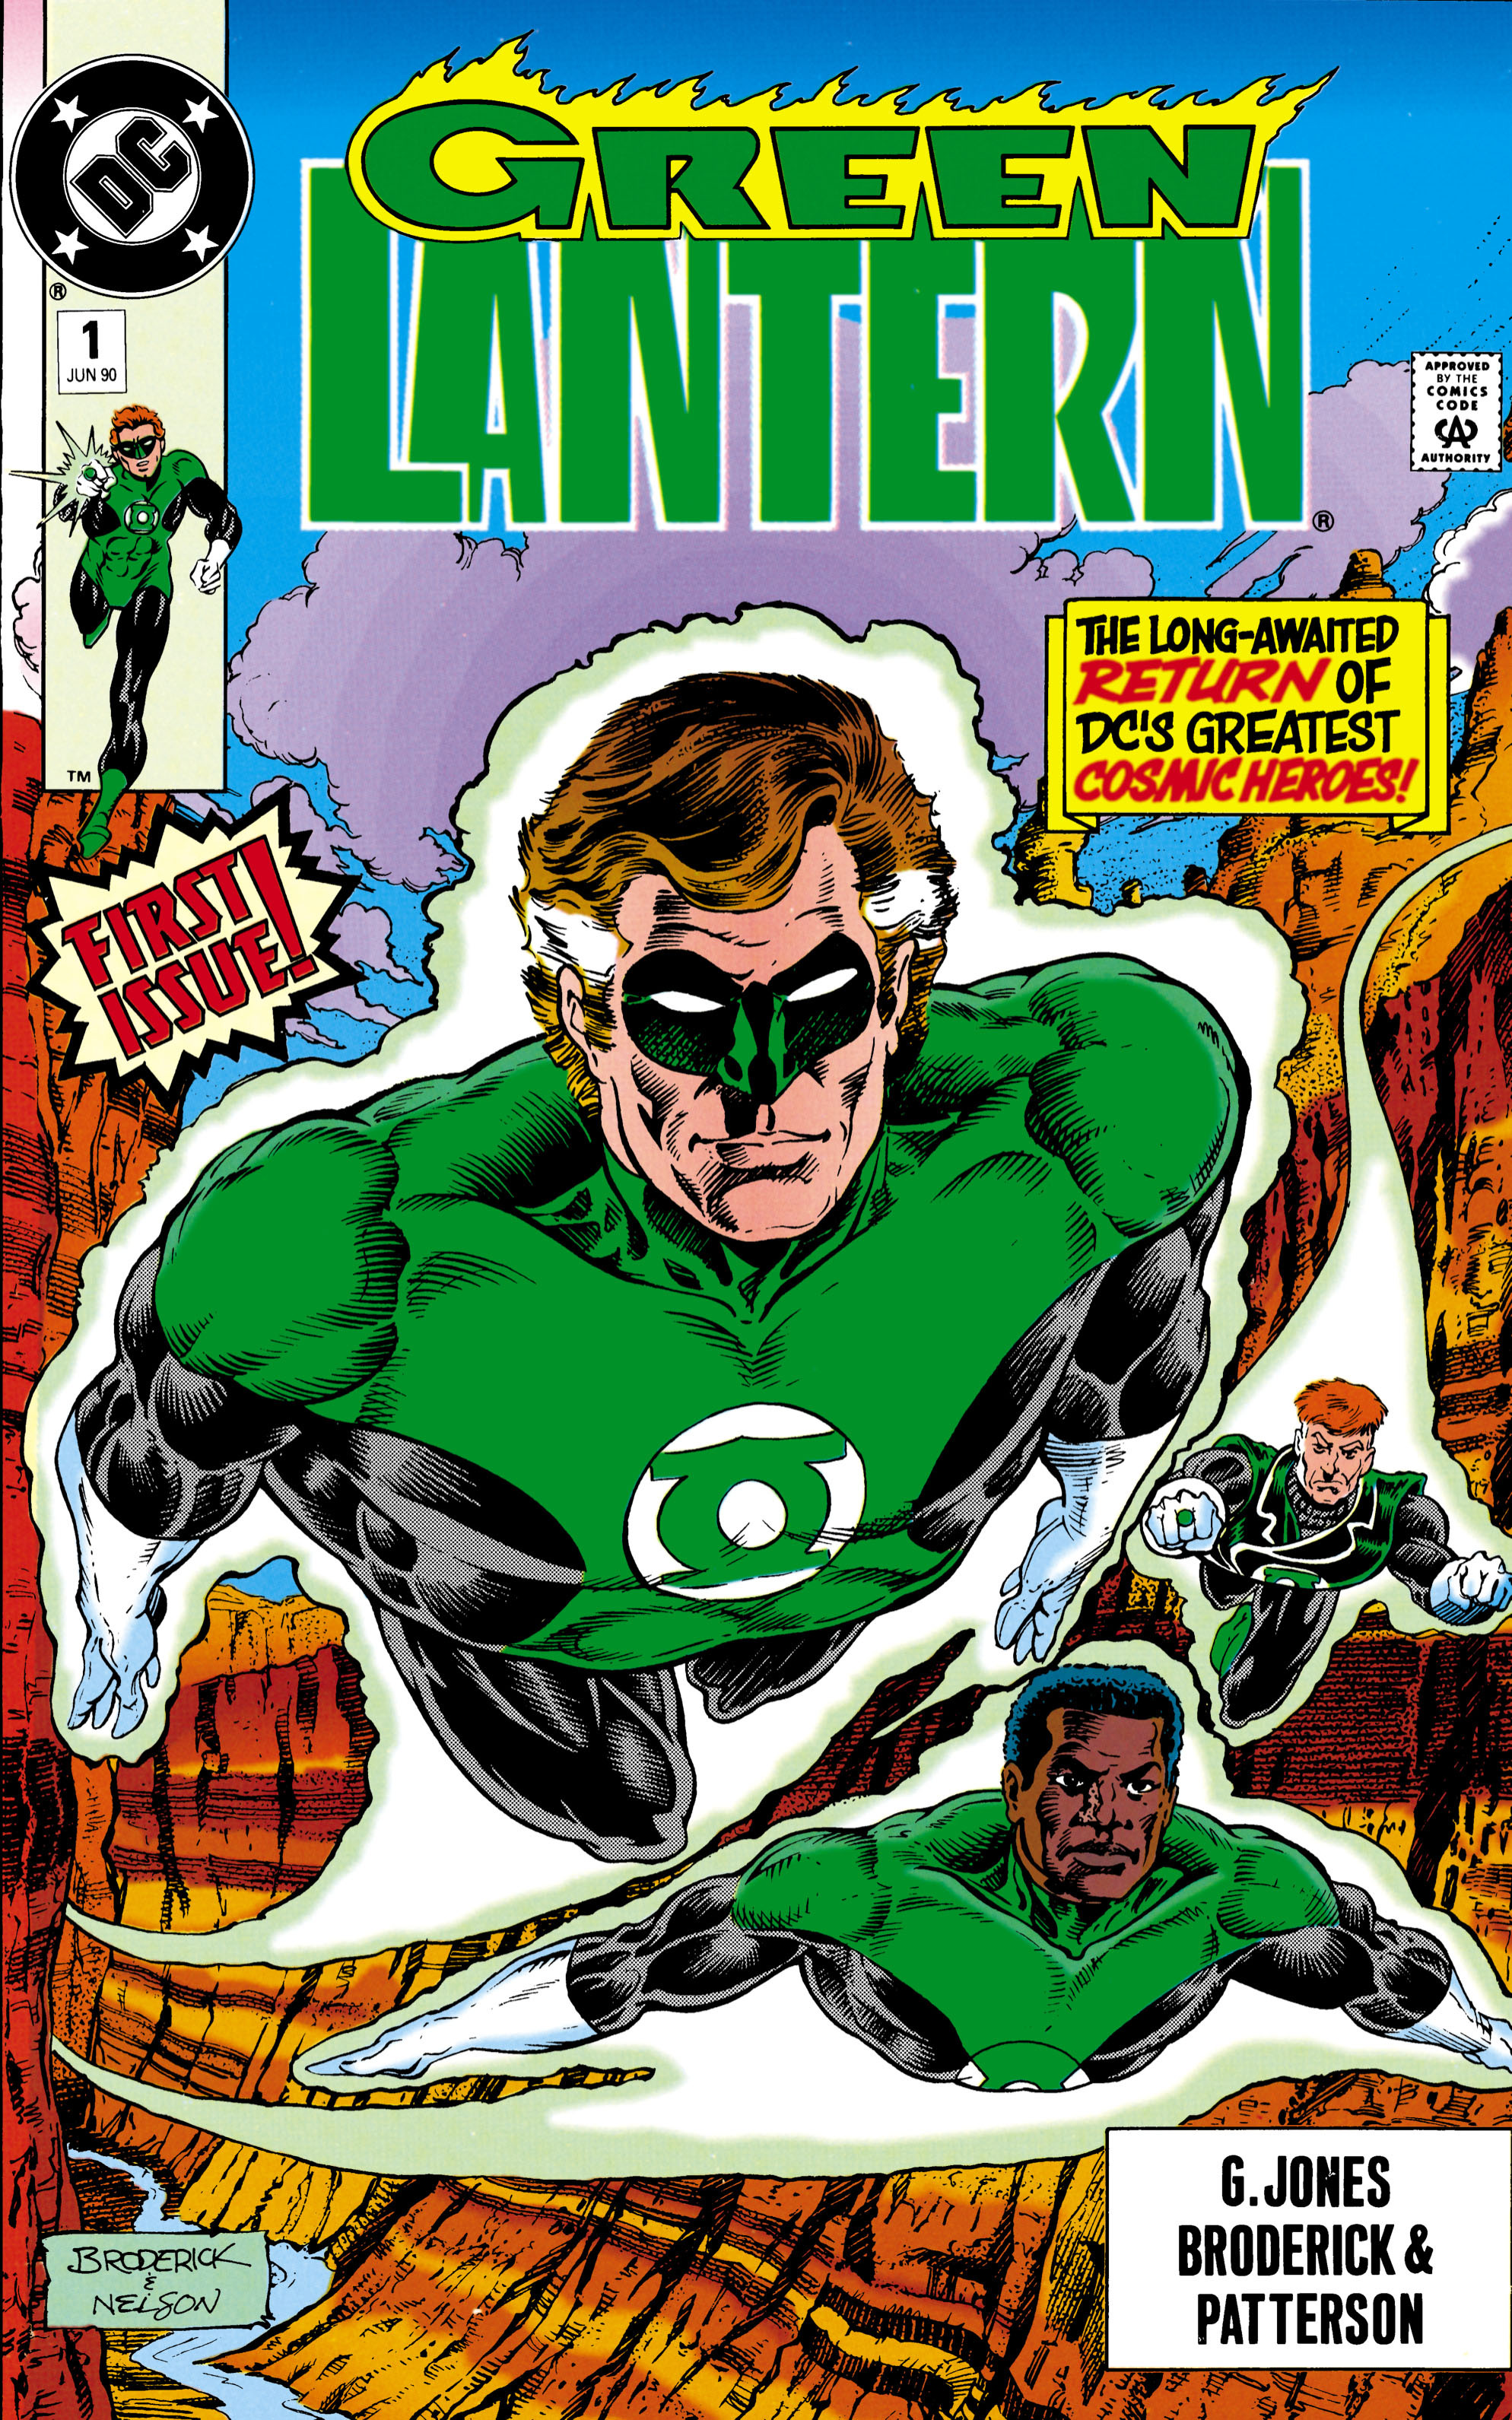 Green Lantern 1990 Issue 1 Read Green Lantern 1990 Issue 1 comic